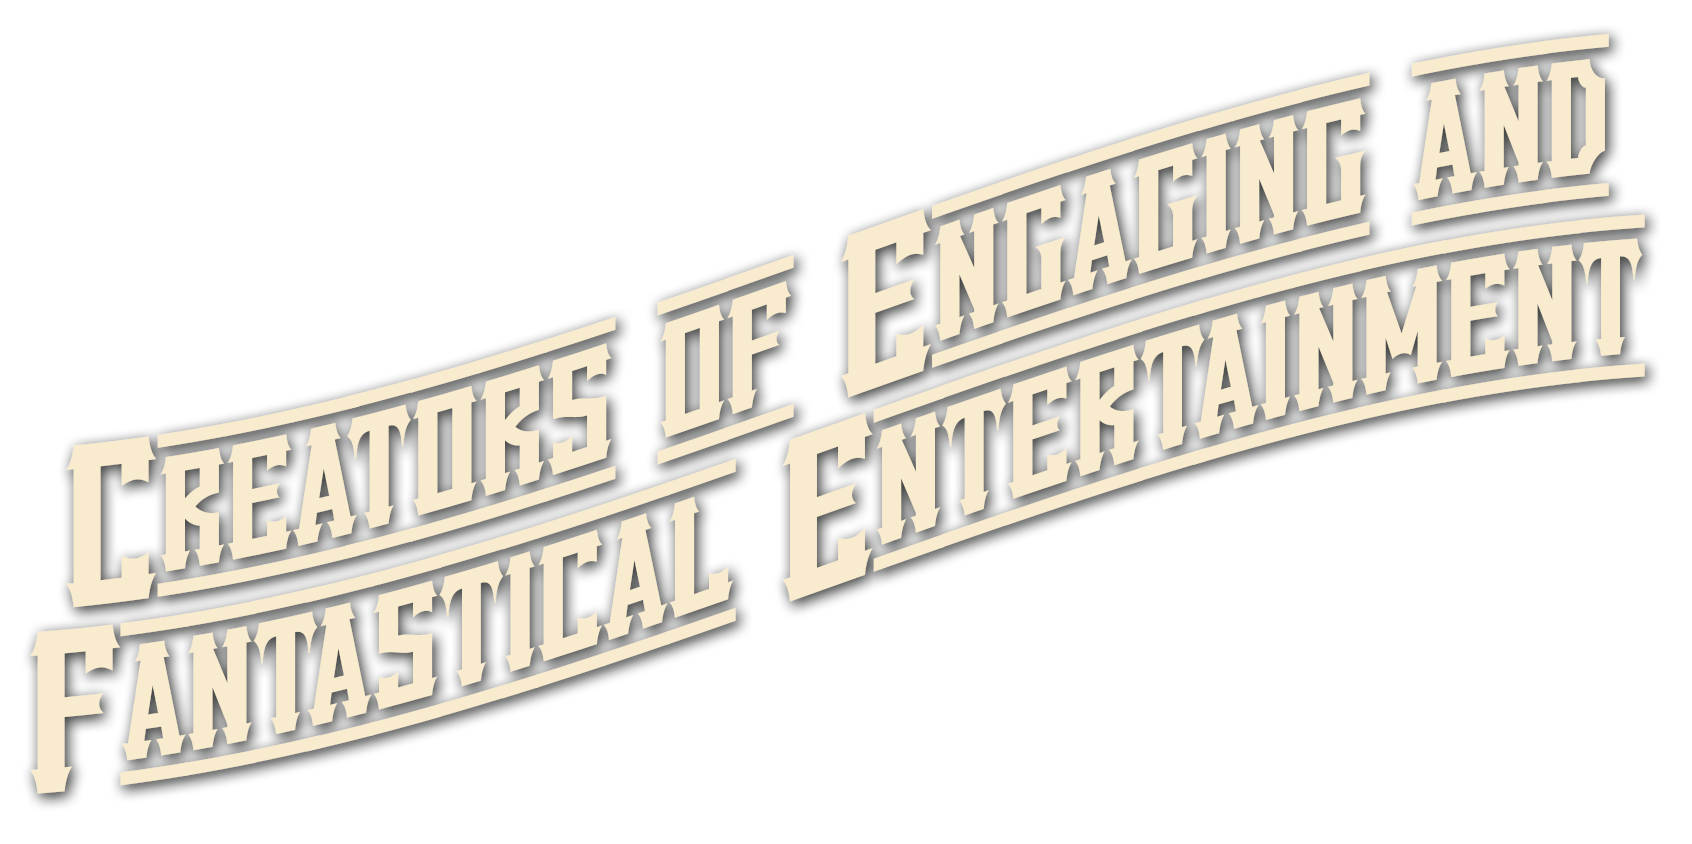 Creators of engaging and fantastical entertainment